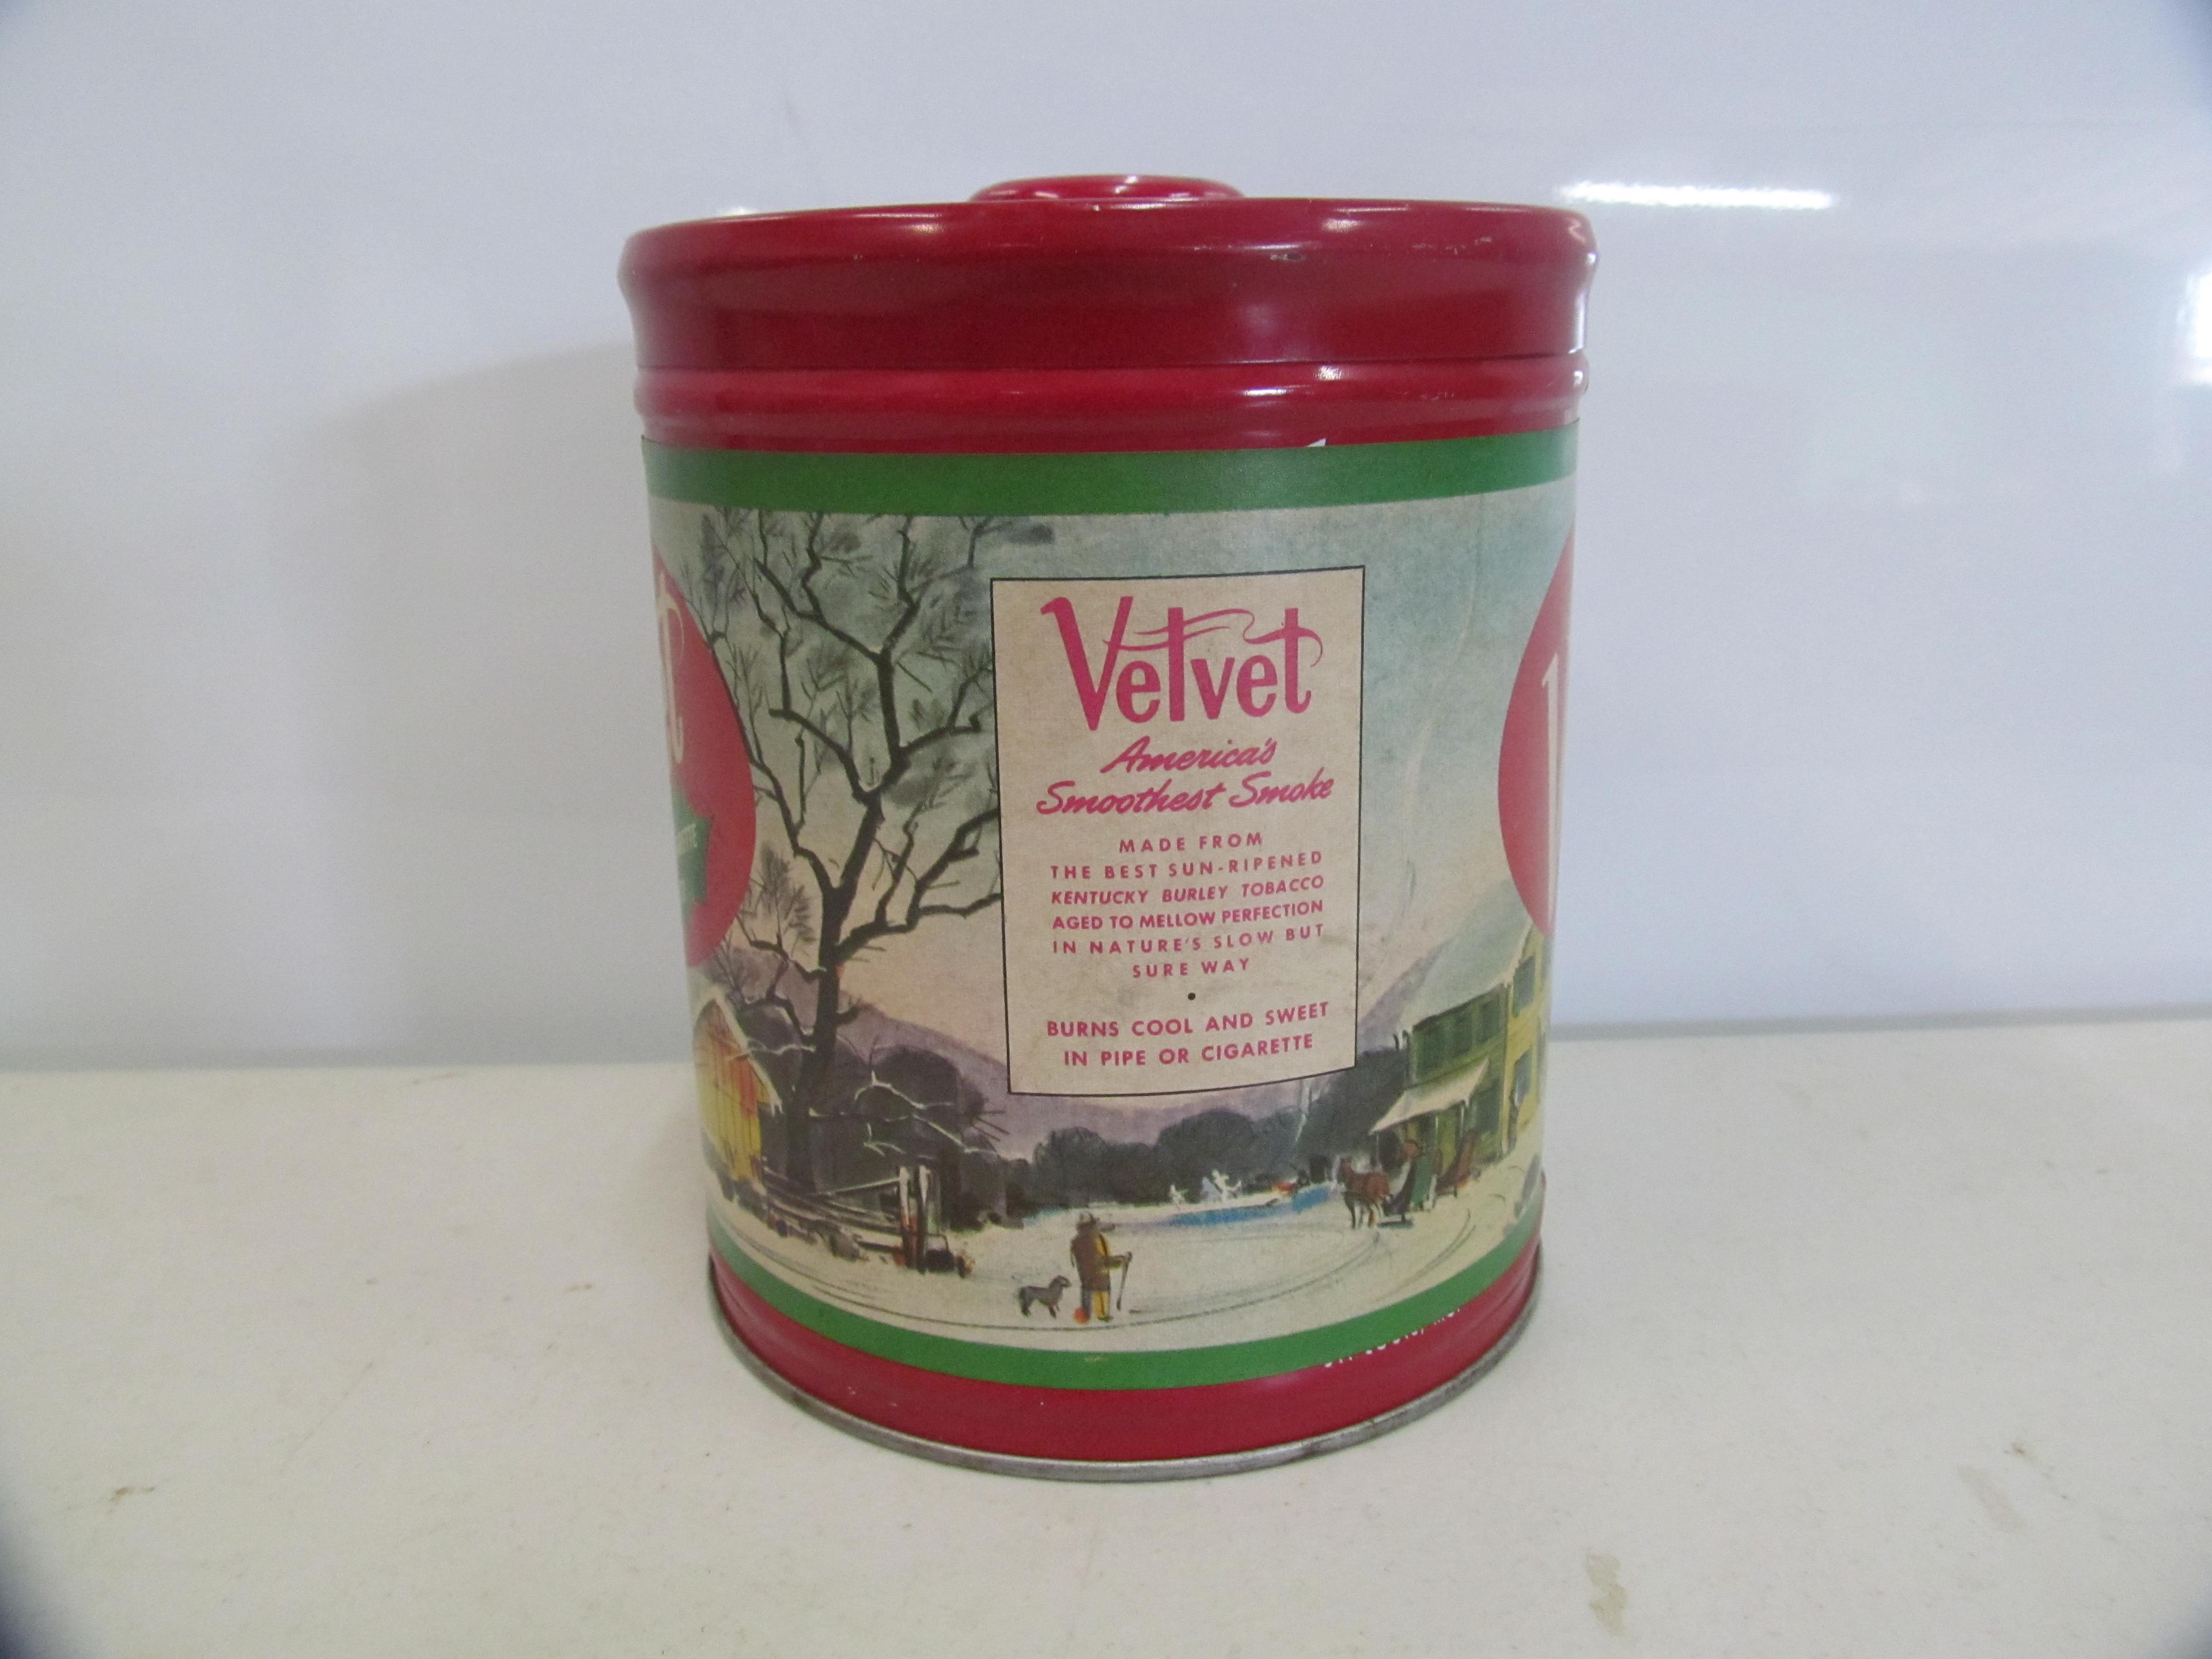 Velvet; Pipe and Cigarette tobacco seasons greetings canister